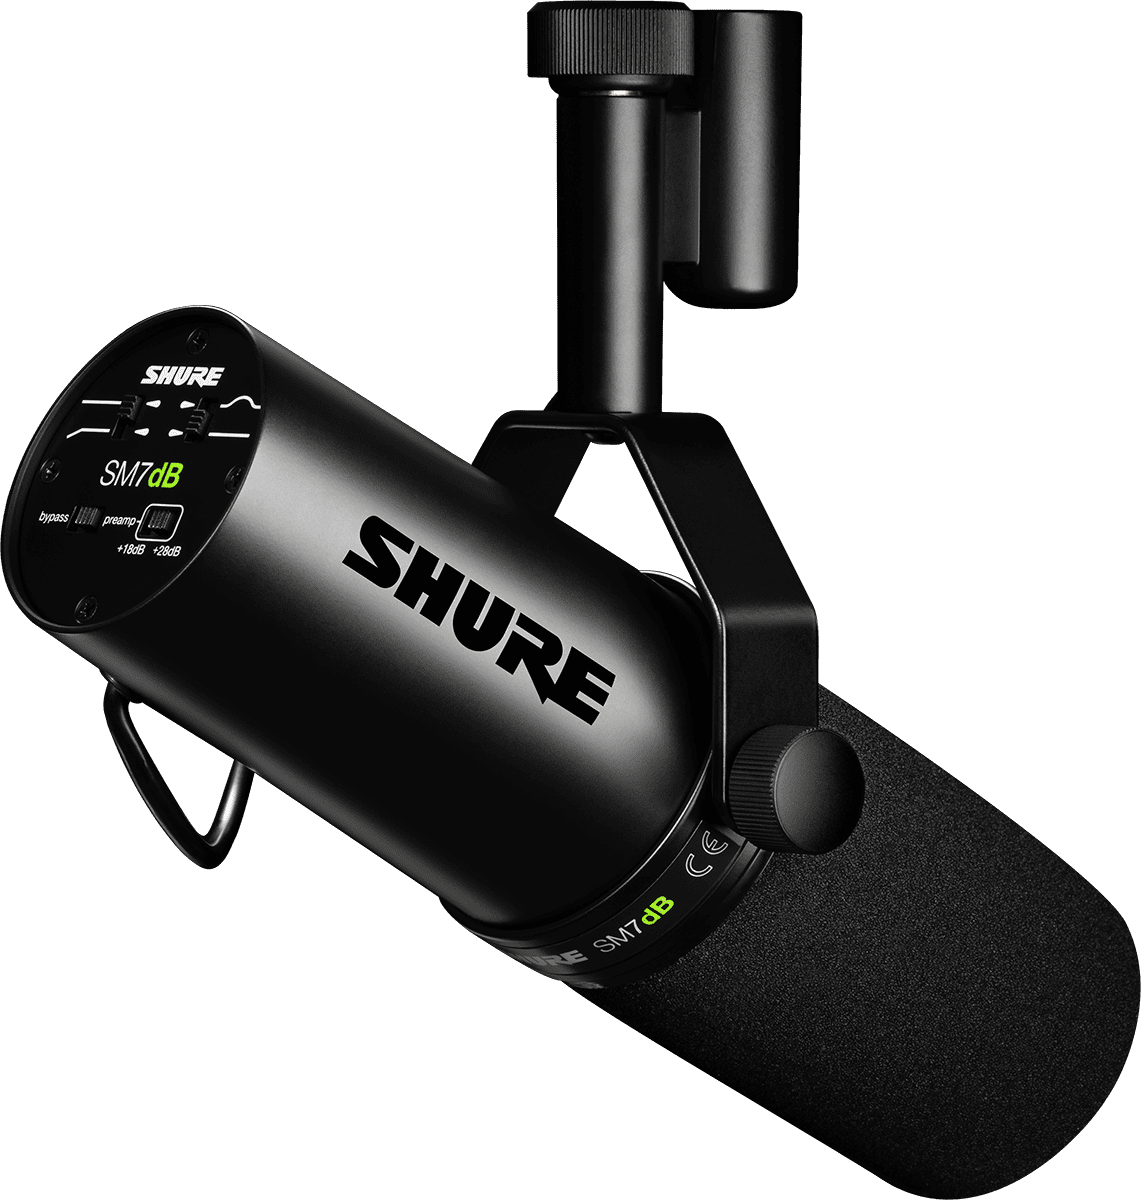 Shure Sm7db - Microphone podcast / radio - Variation 1